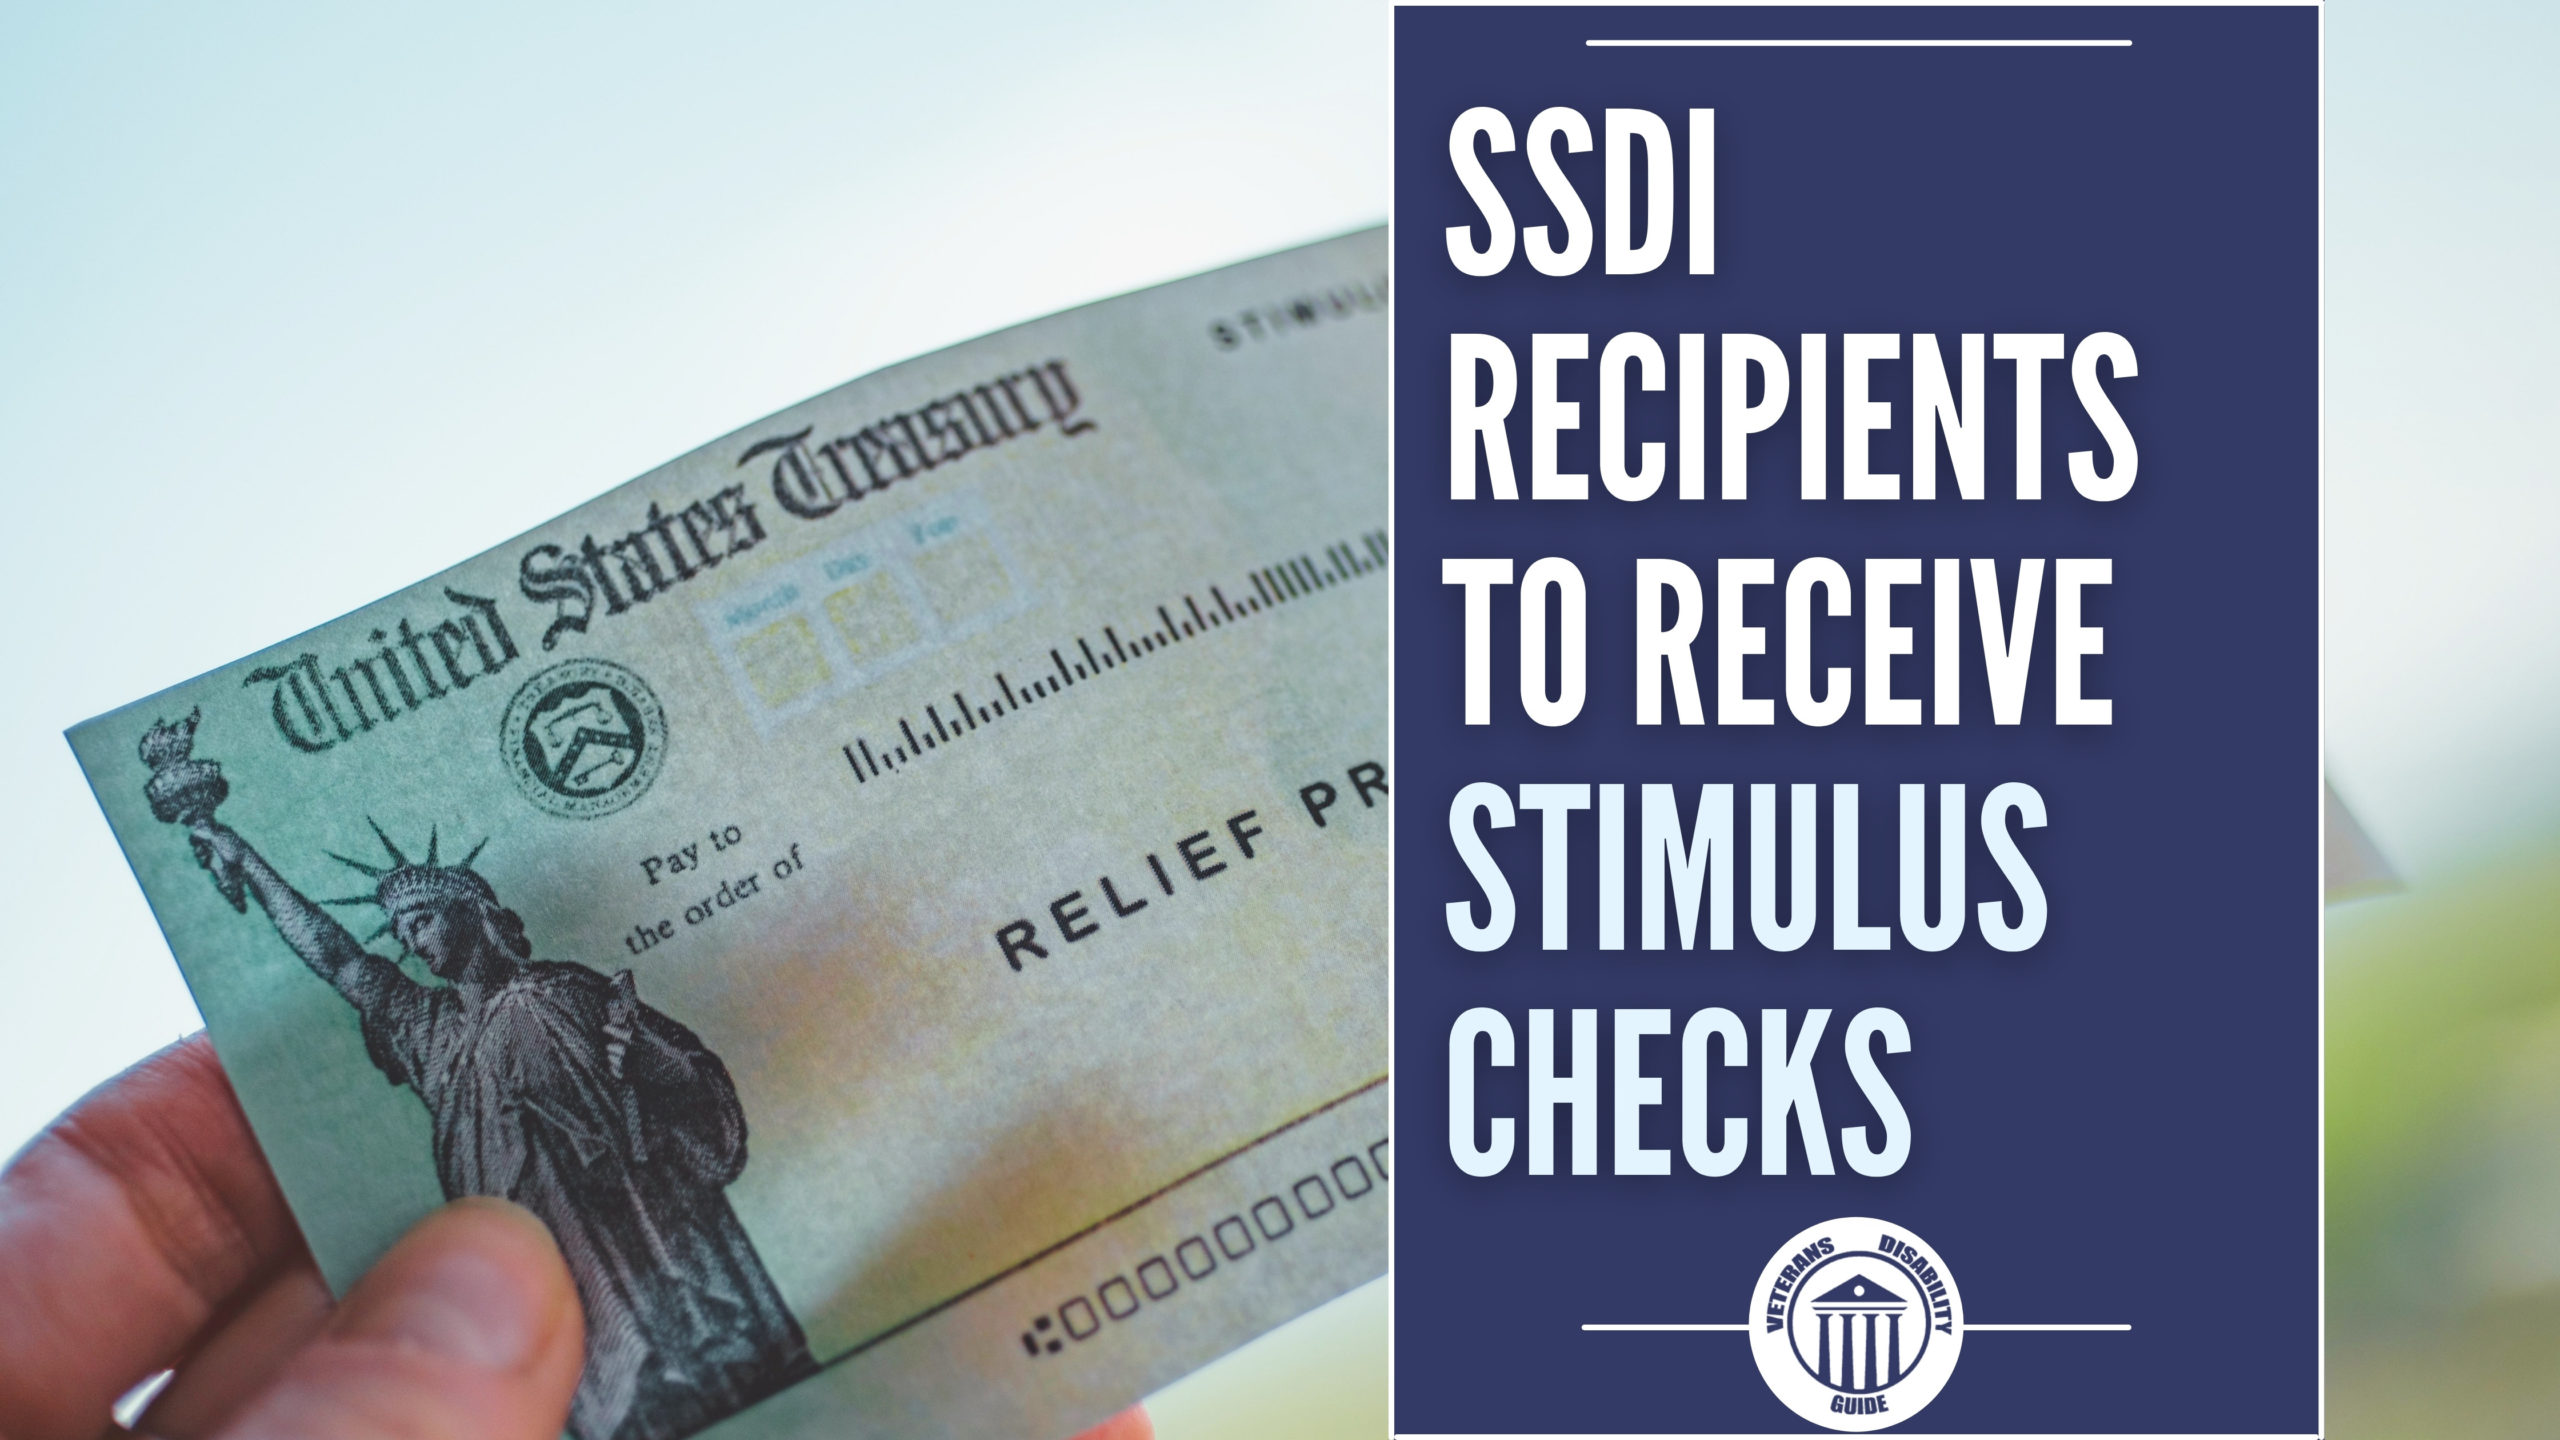 SSDI Recipients To Receive Stimulus Checks blog header image